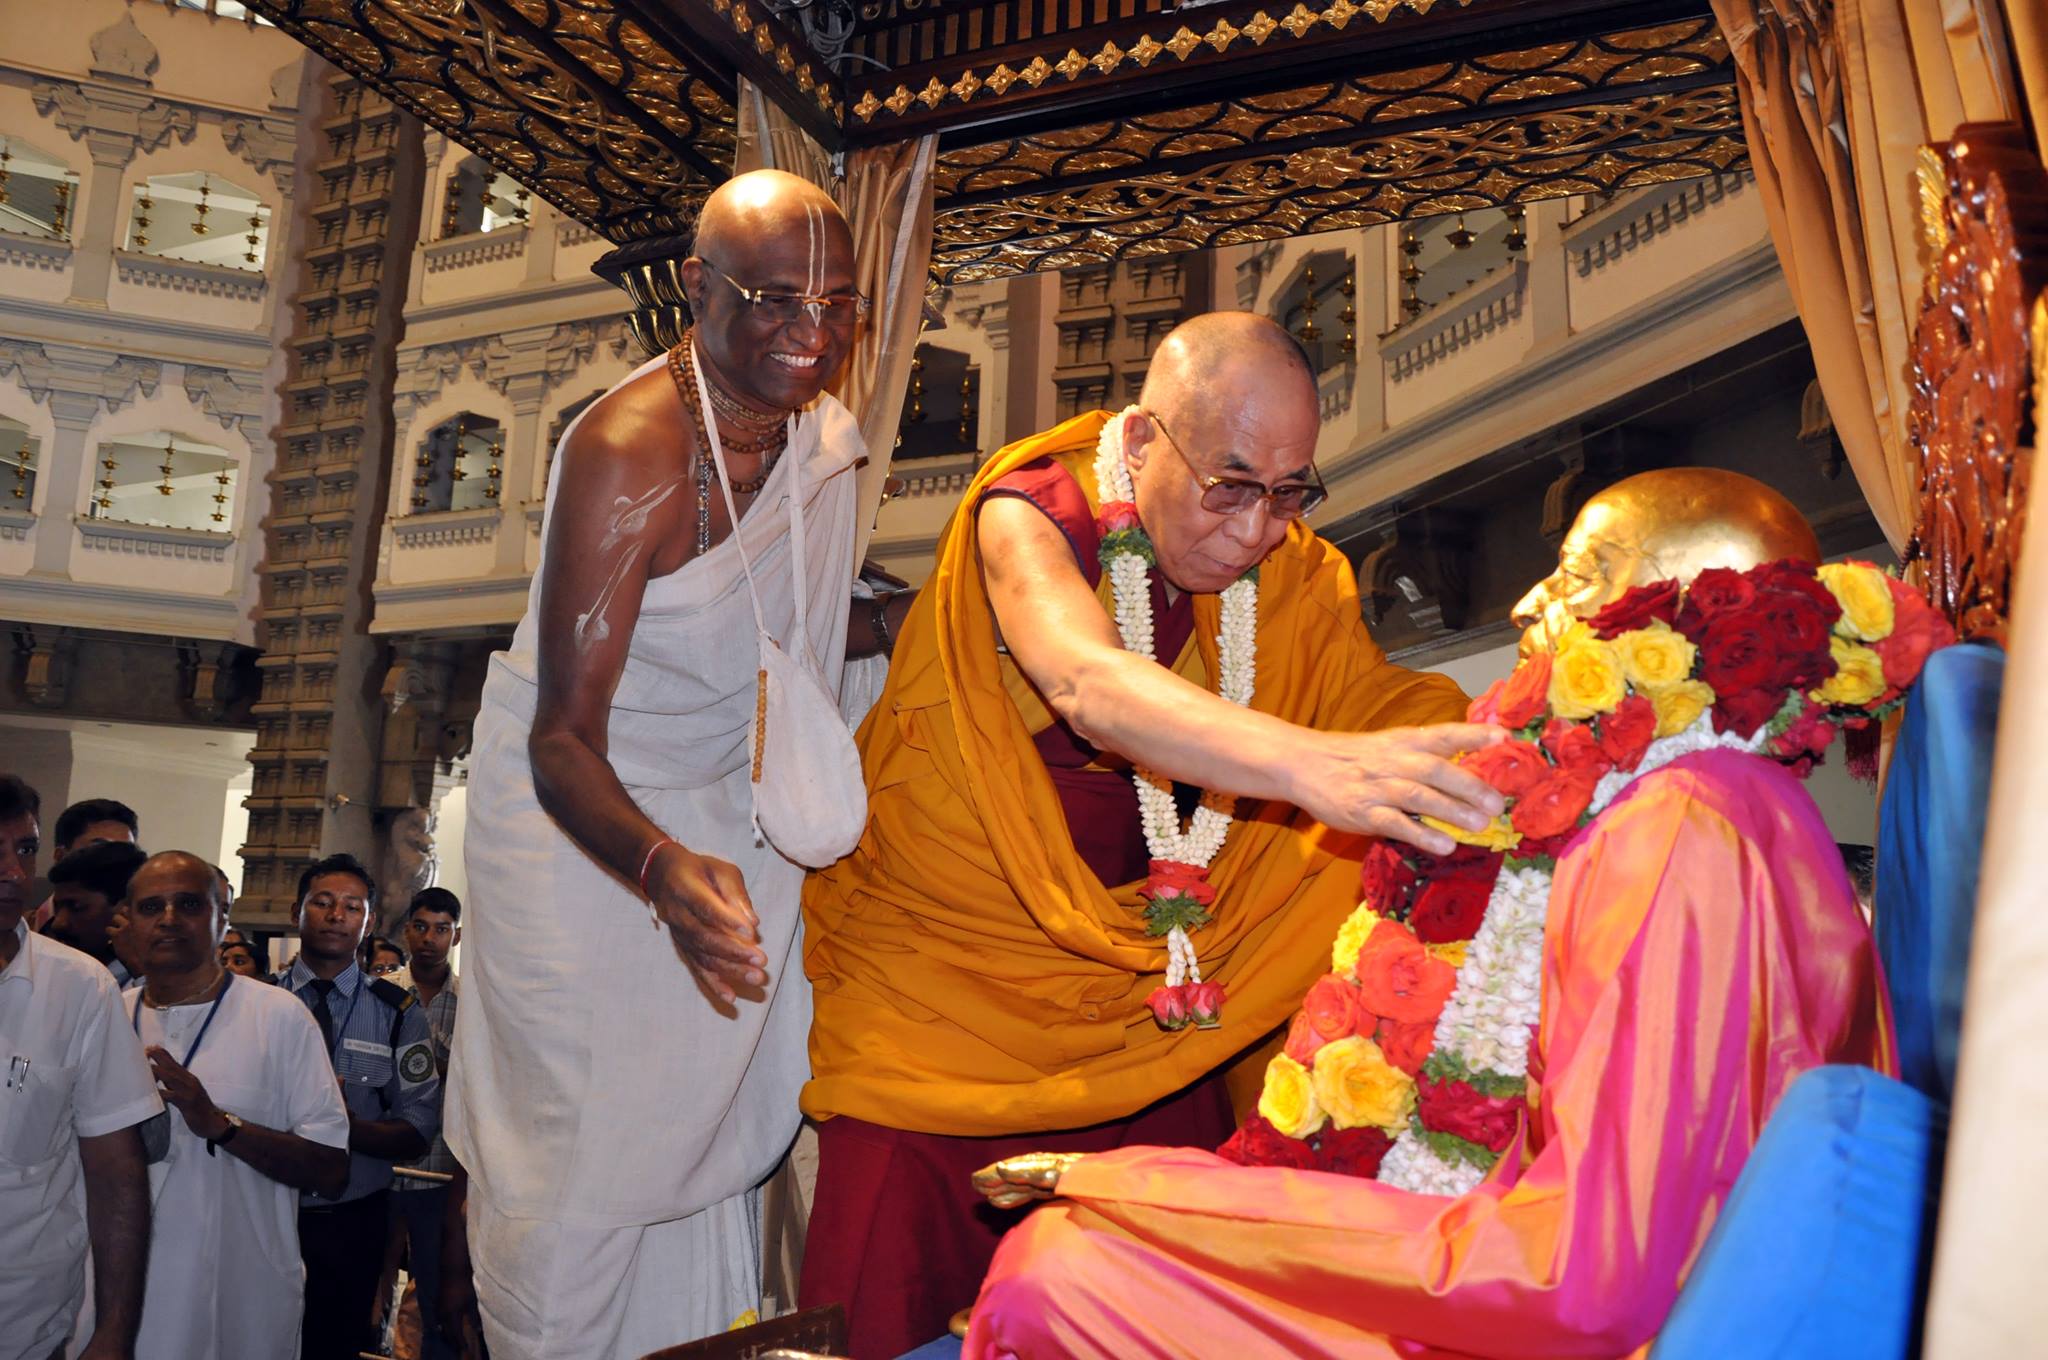 https://theharekrishnamovement.files.wordpress.com/2013/08/his-holiness-the-dalai-lama-of-tibet.jpg